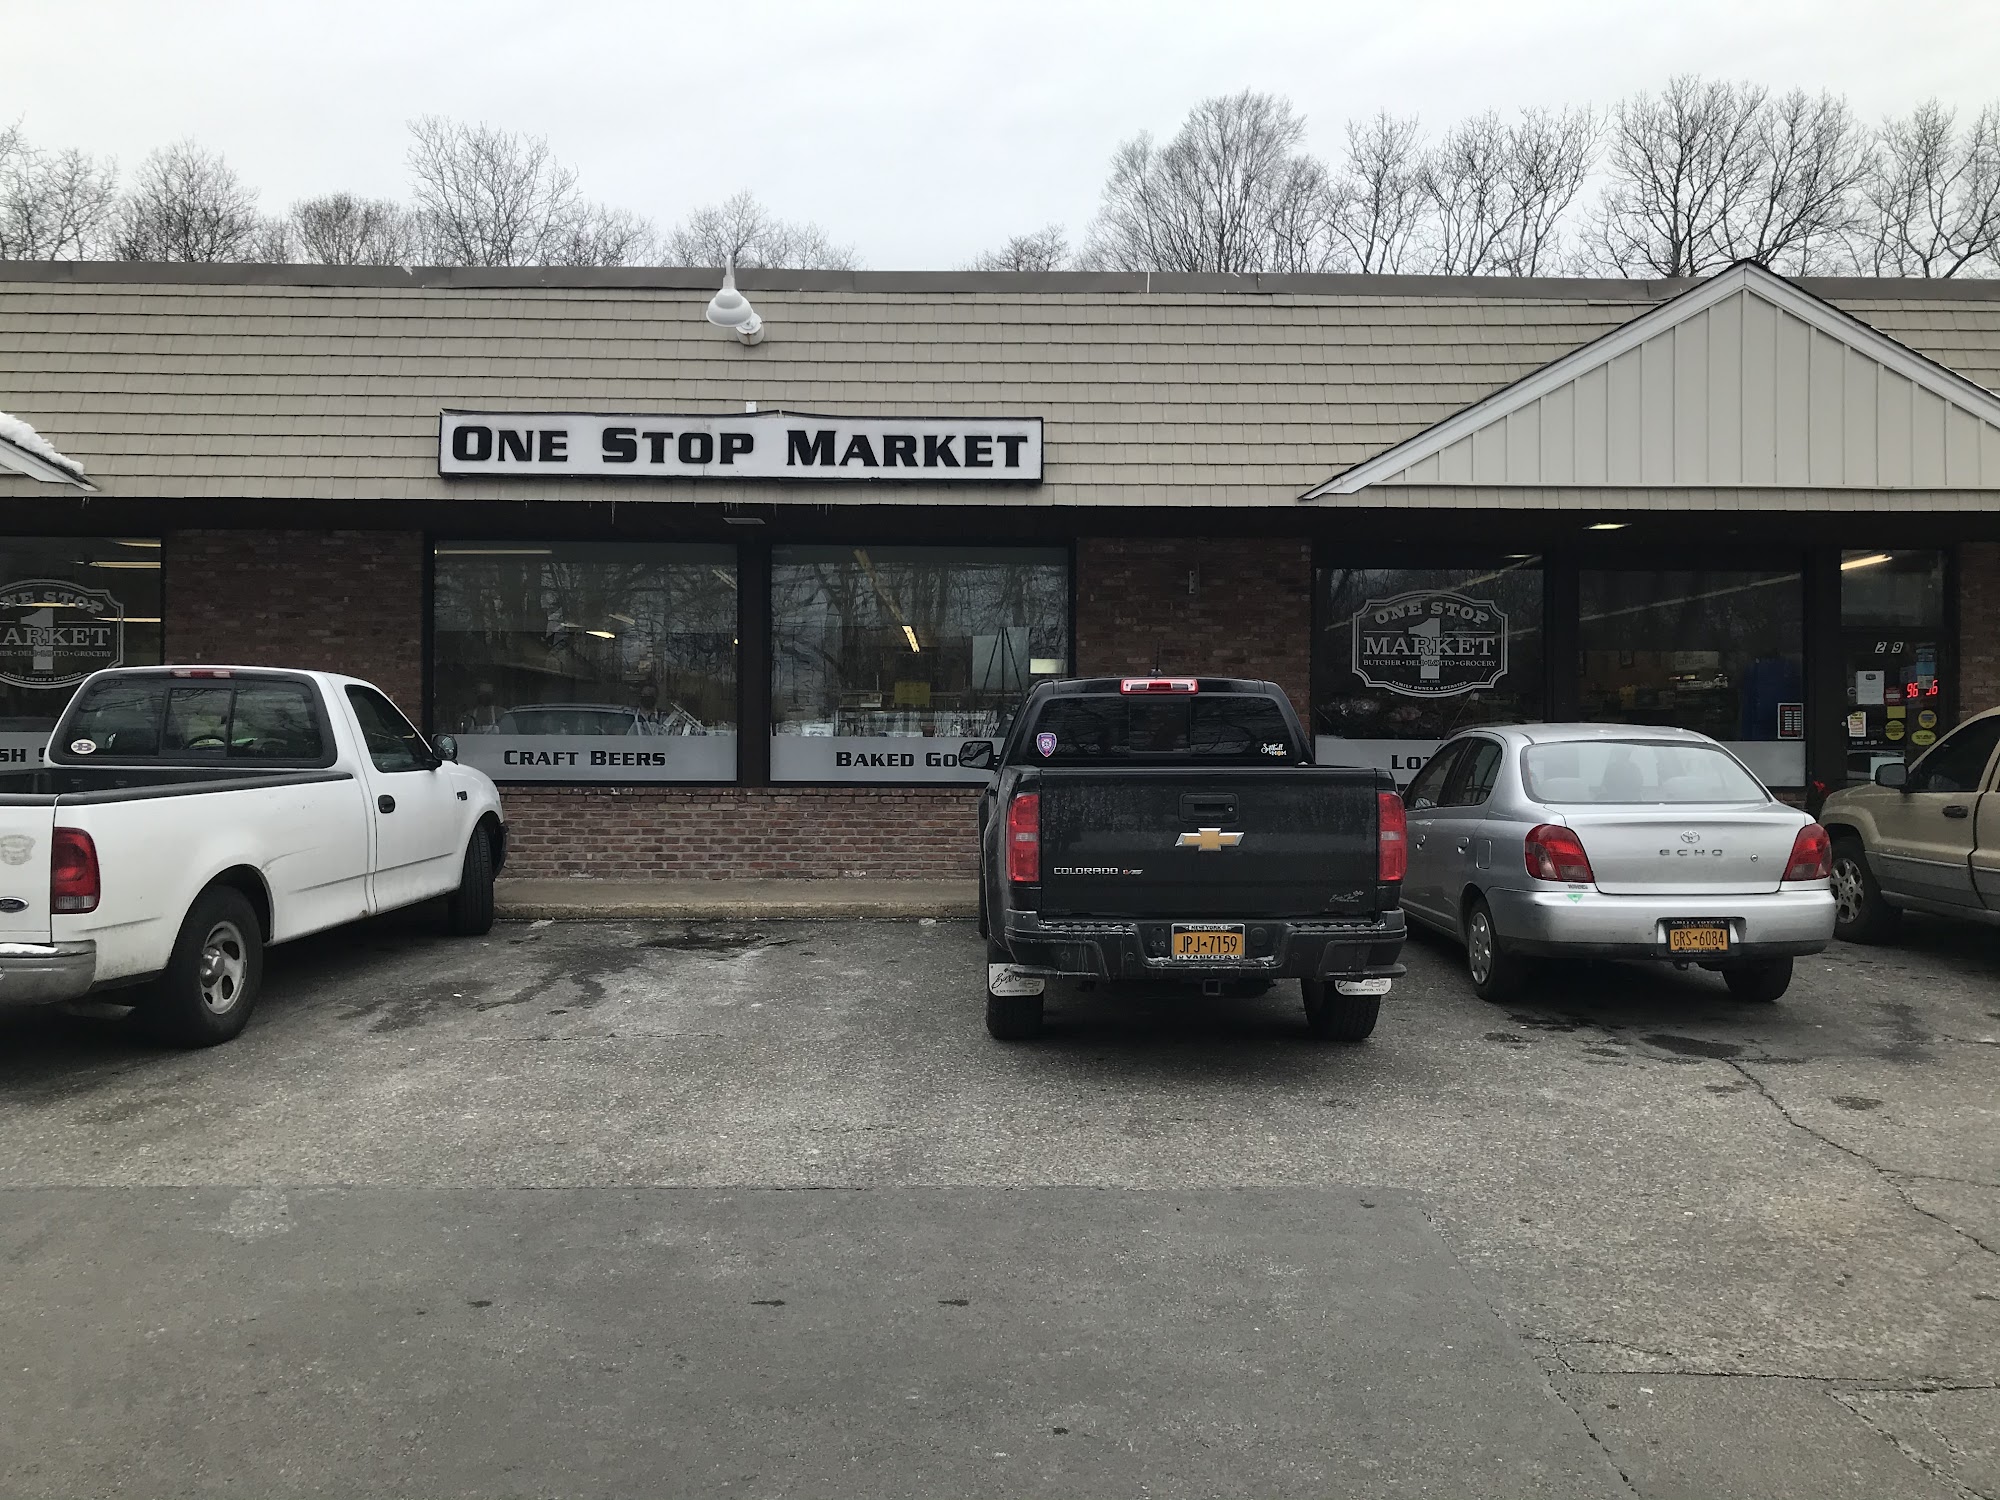 One Stop Market